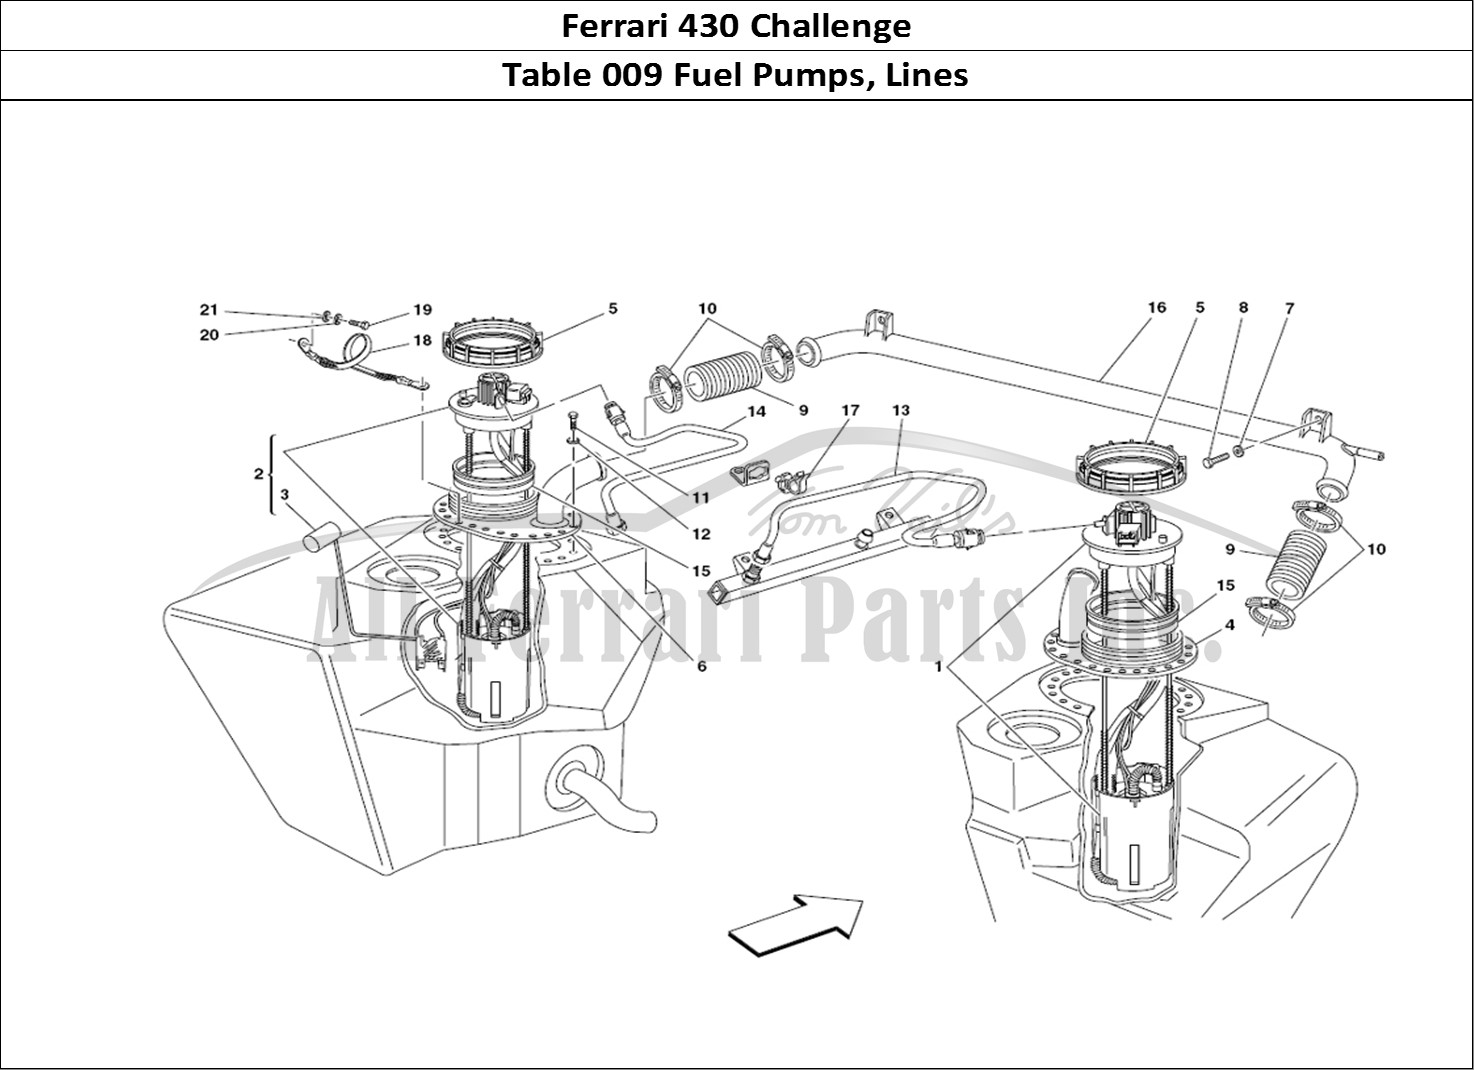 Ferrari Parts Ferrari 430 Challenge (2006) Page 009 Fuel Pumps and Pipes